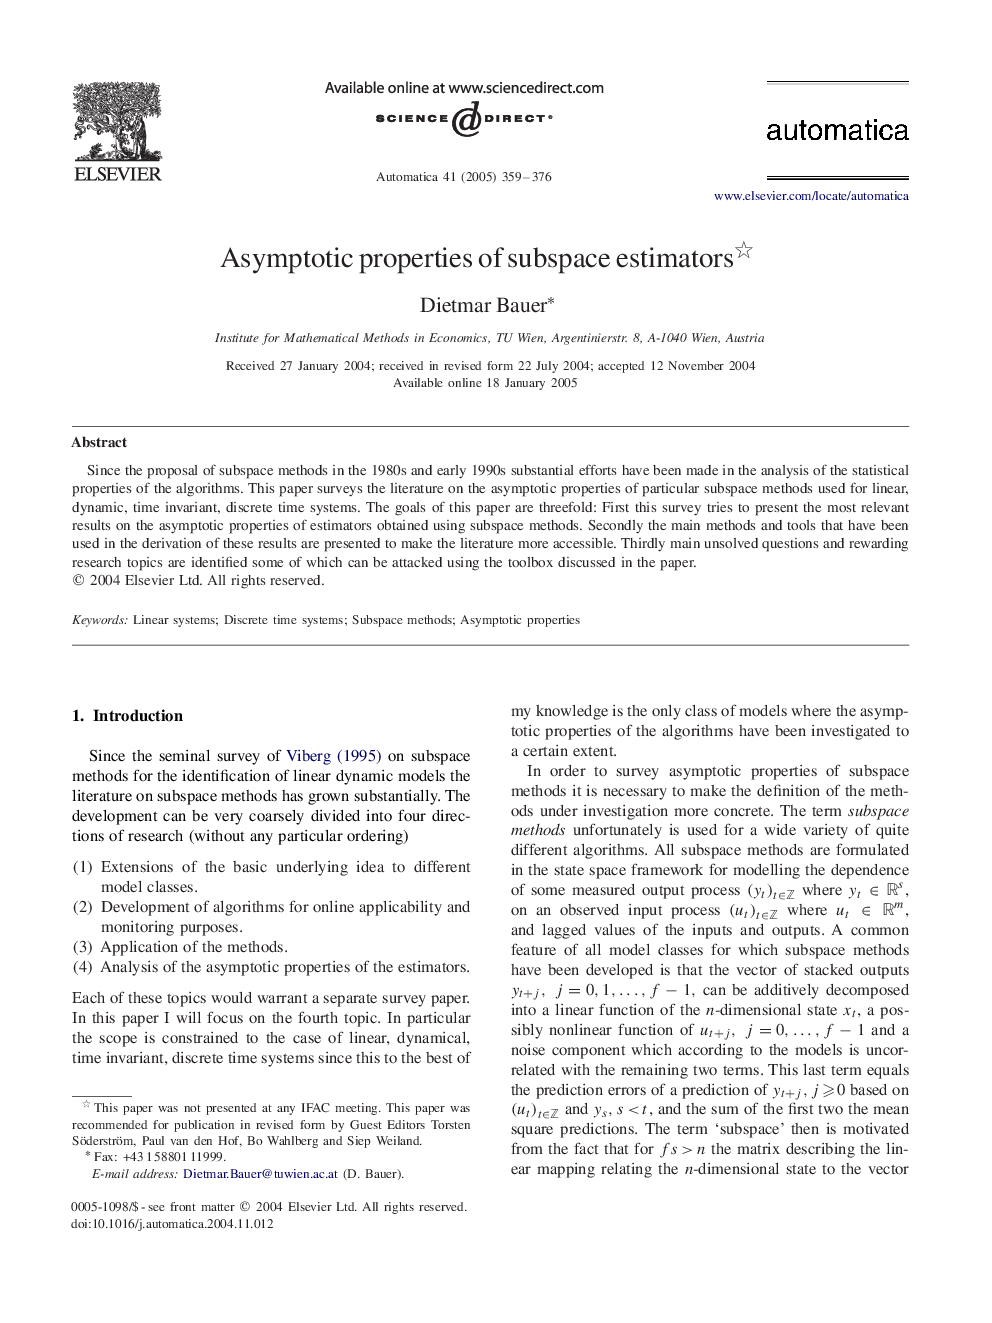 Asymptotic properties of subspace estimators